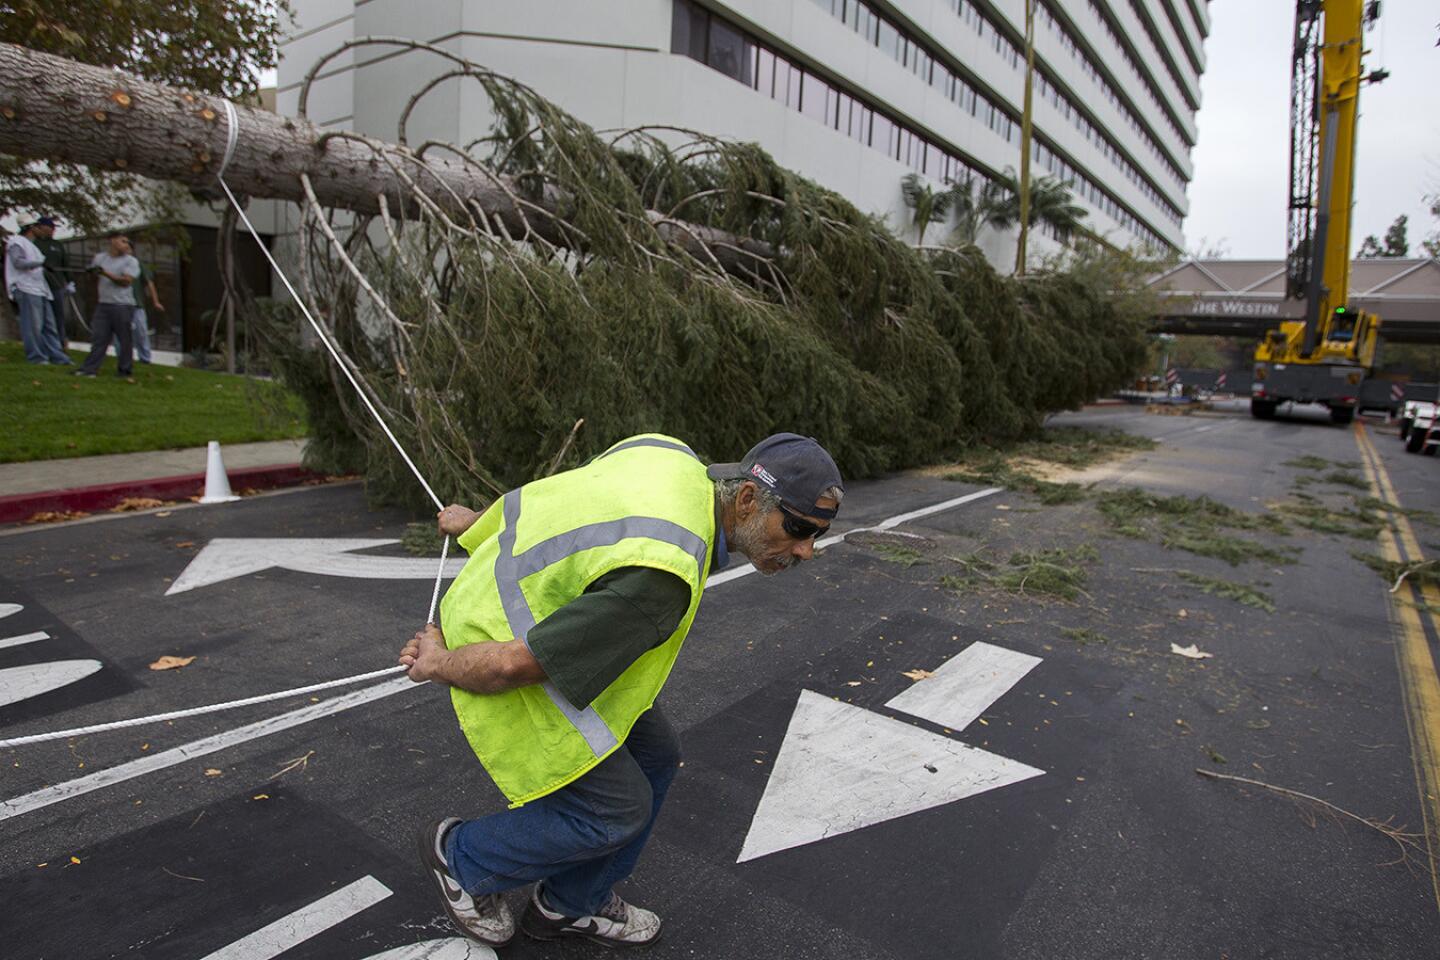 96-Foot Christmas Tree Makes Its Way To South Coast Plaza - CBS Los Angeles